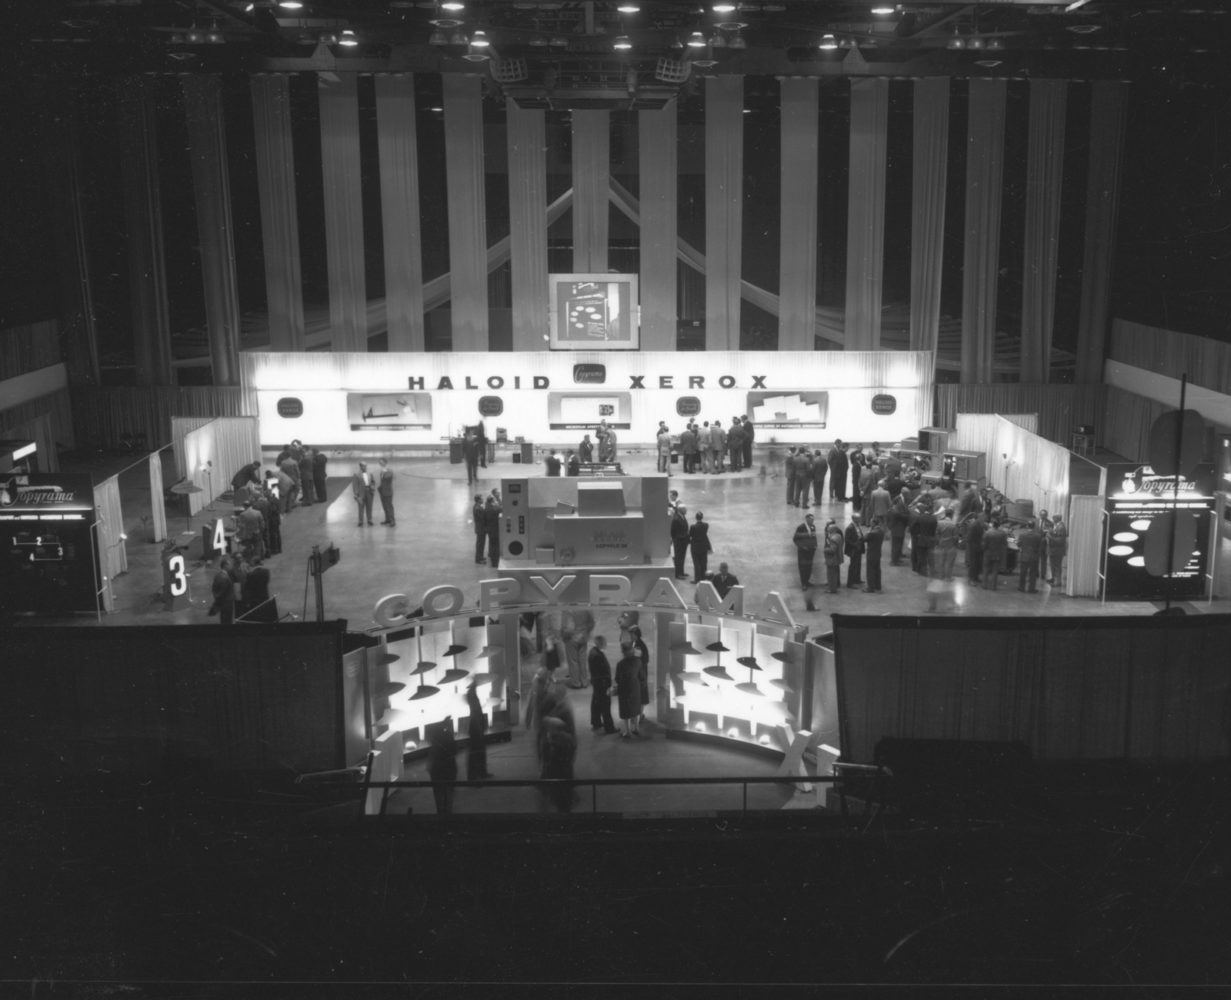 Haloid Xerox trade show in Rochester, New York - photo by Paul Dodd 1976